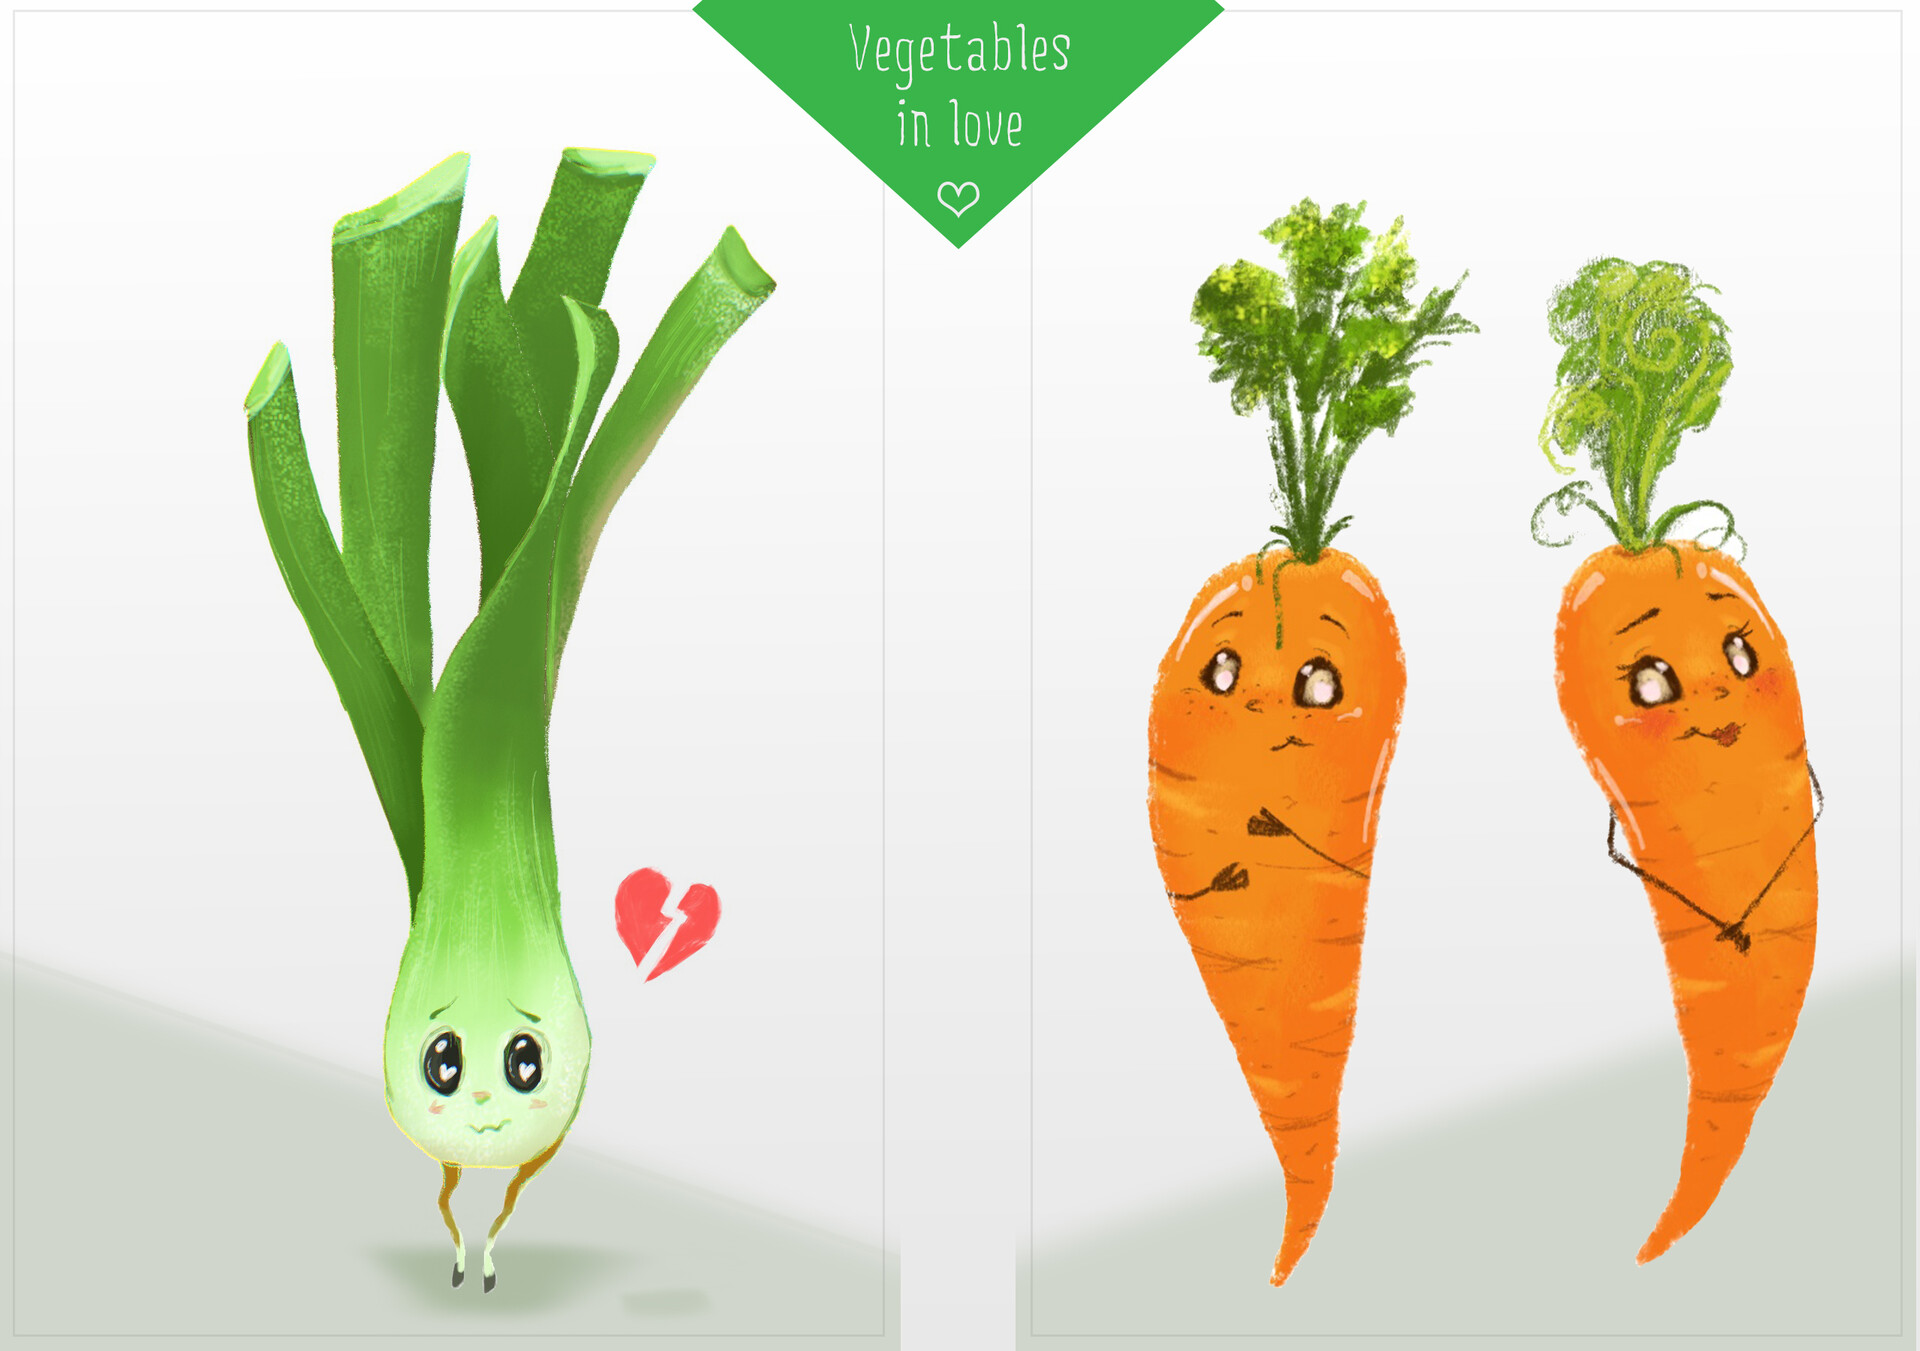 ArtStation - Sweet cartoon vegetables